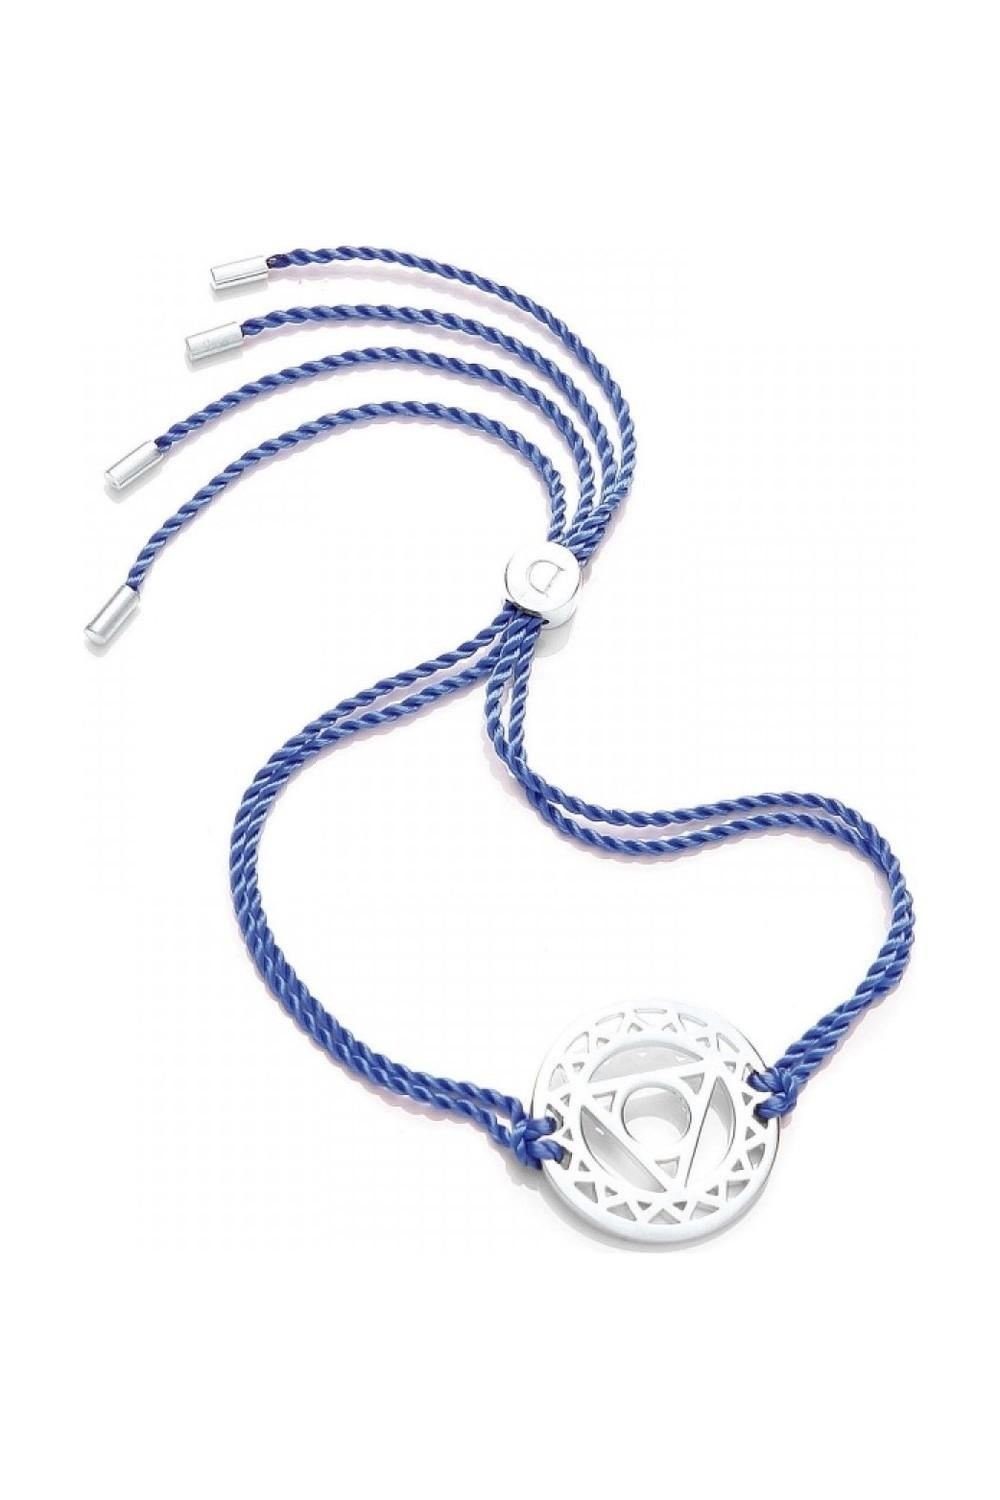 Daisy London Armband Silver Throat Blau Chakra Blue, Textil, 925er Sterling-Silber aus und Zugband